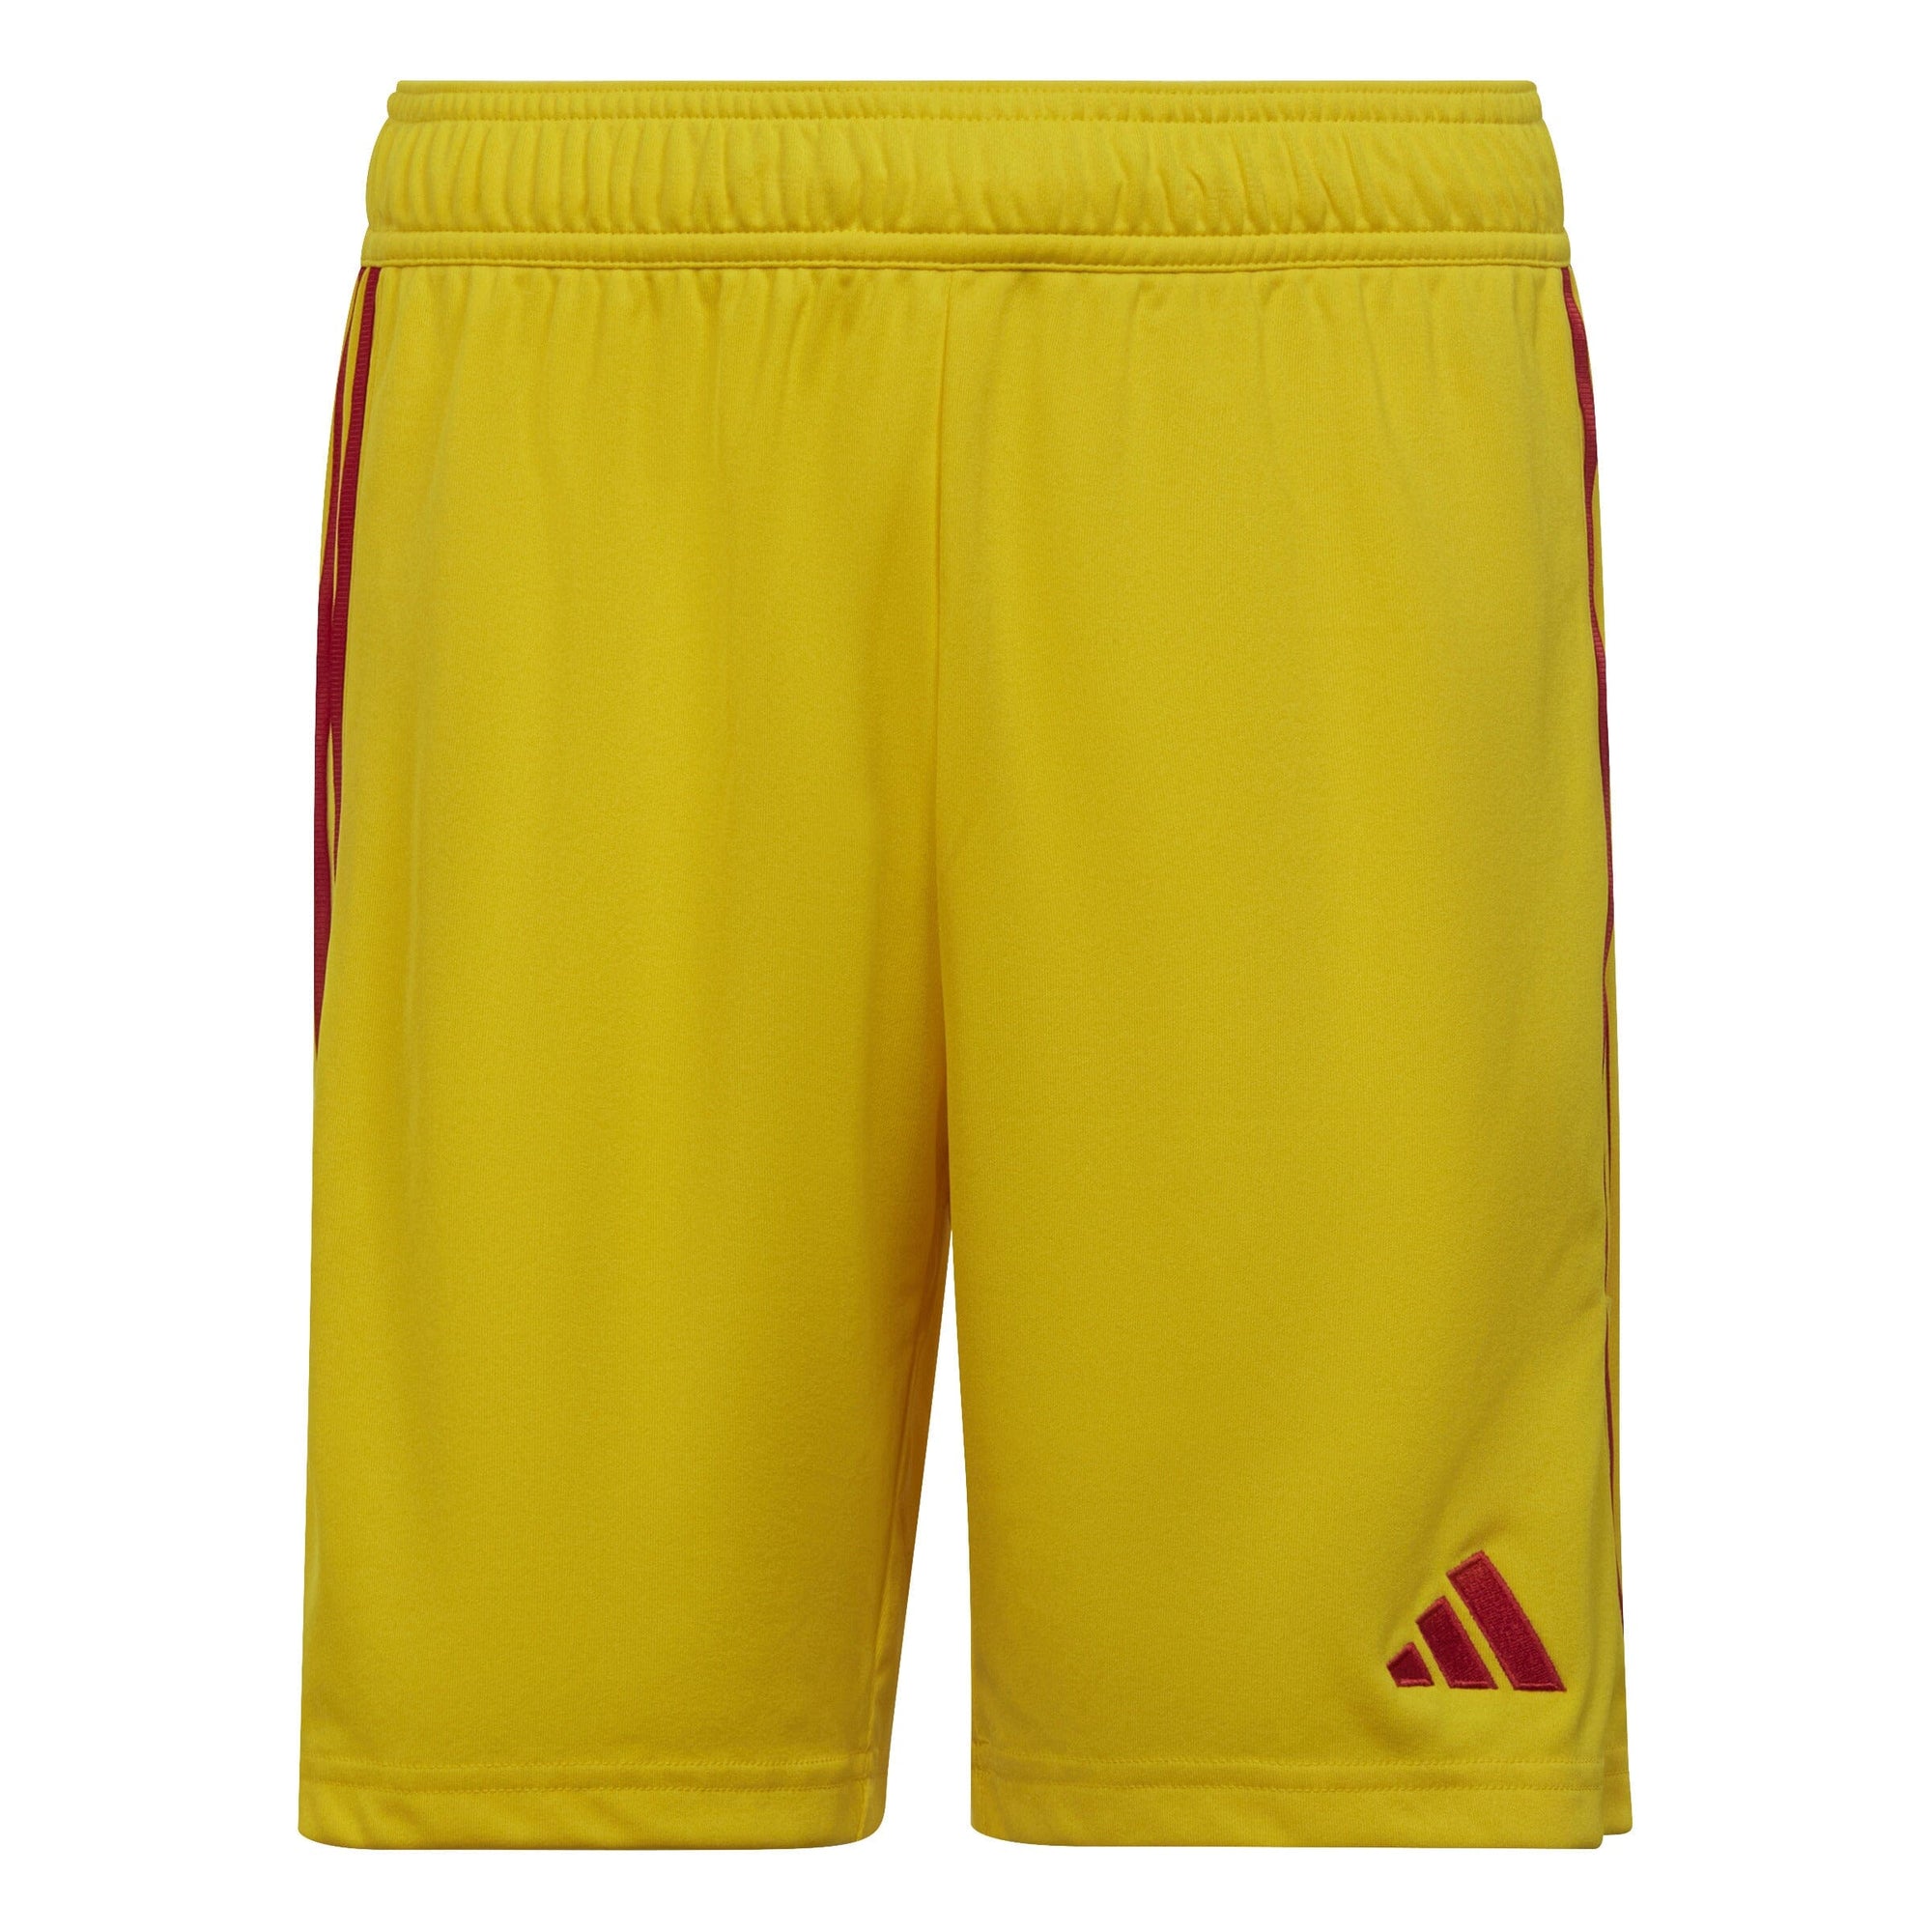 adidas Men's Tiro 23 Short | IB8091 Short Adidas Adult Small Team Yellow / Team Colleg Red 